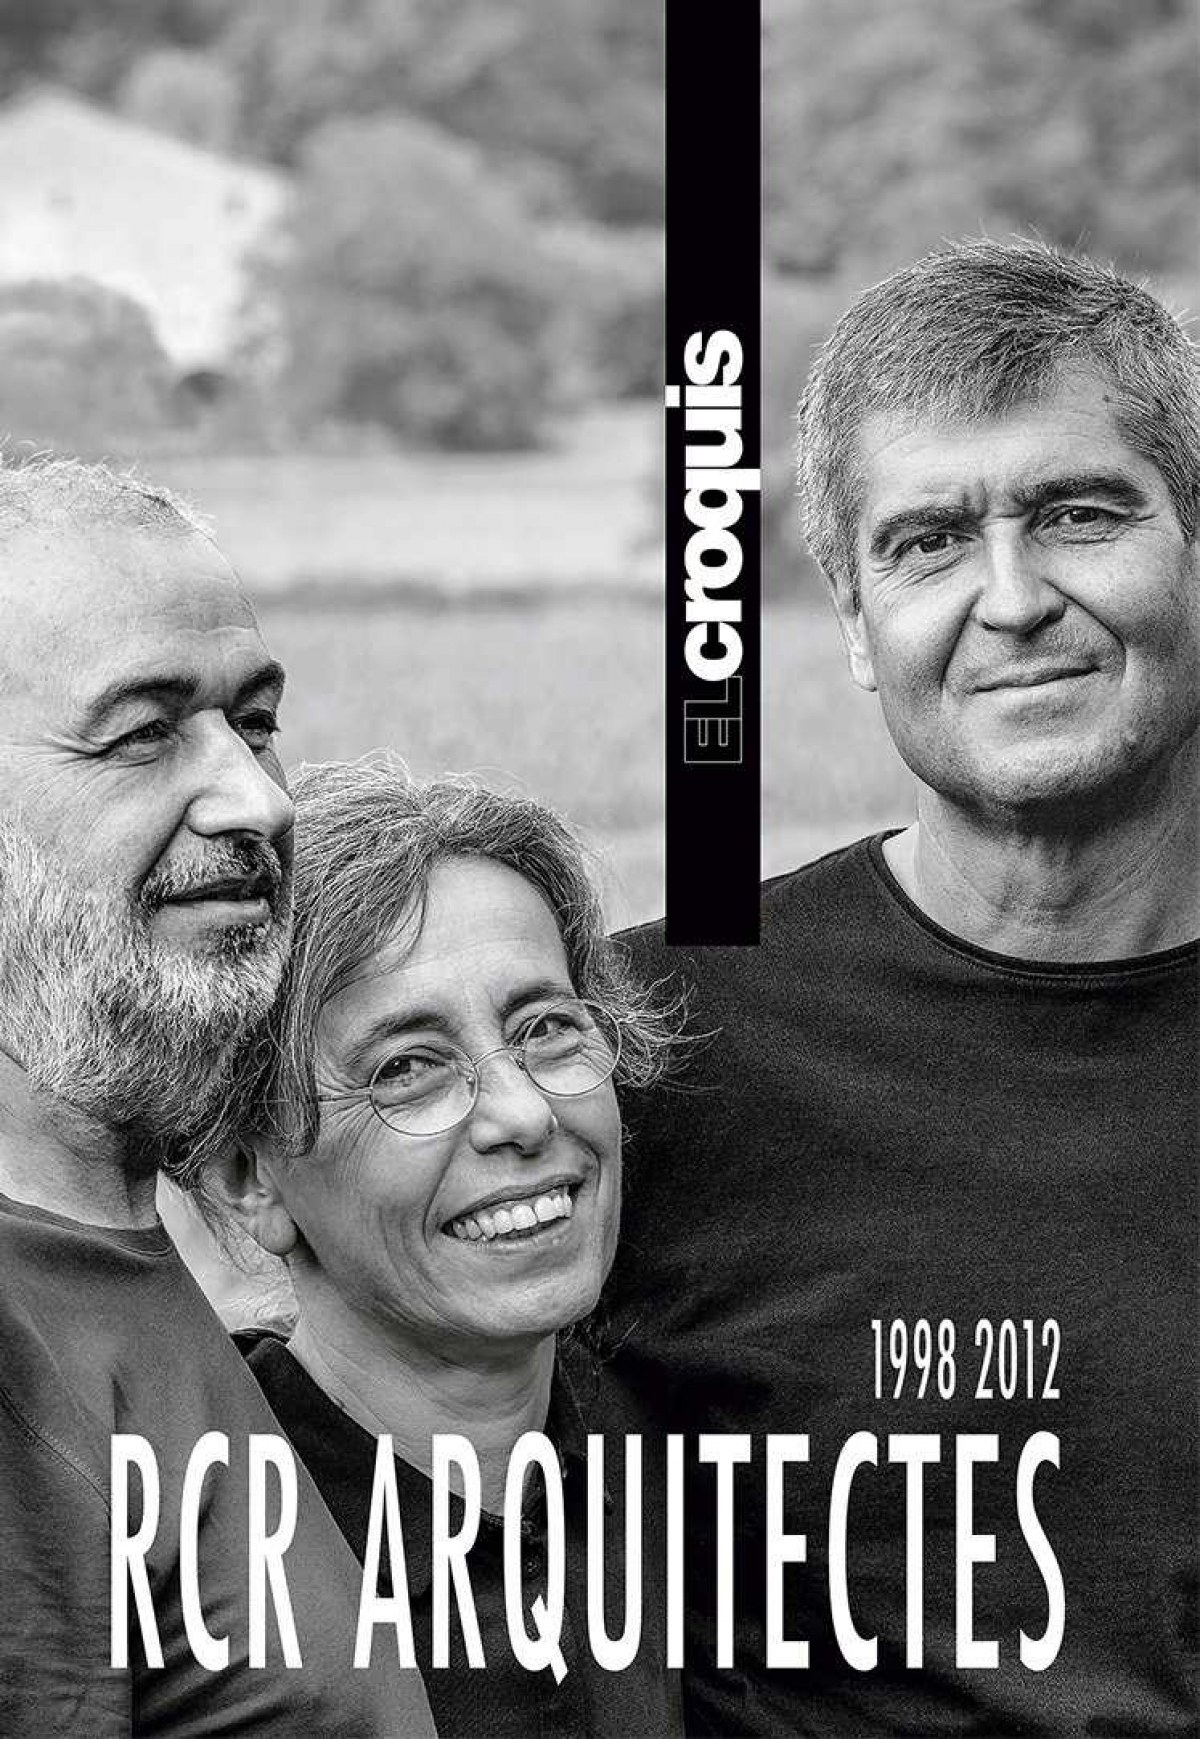 Rcr artquitectes 1998-2012 - Vv.Aa.